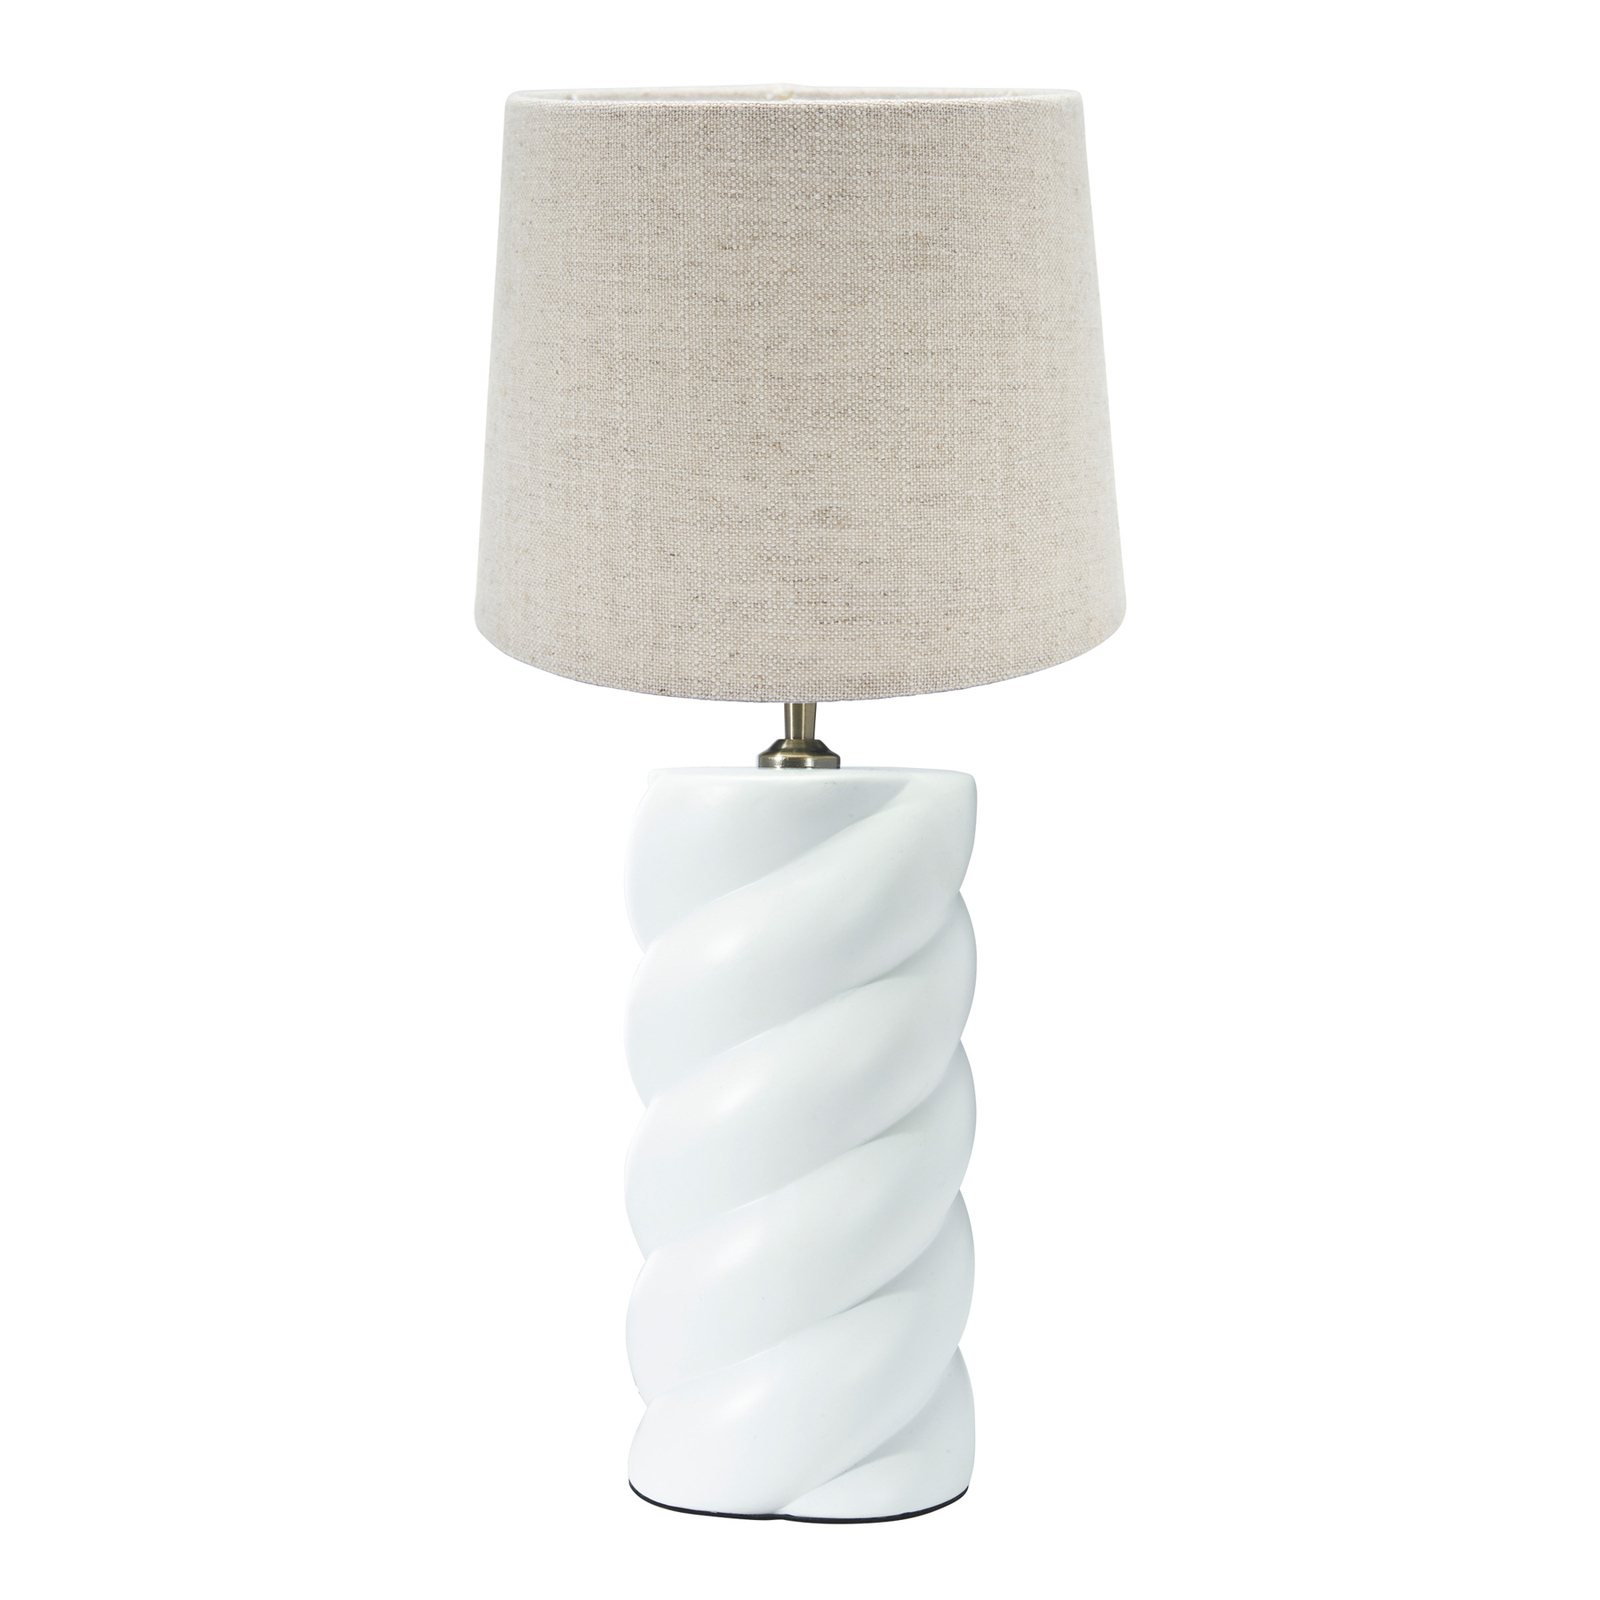 PR Home Spin lampe Ø 35 cm blanc/lin naturel